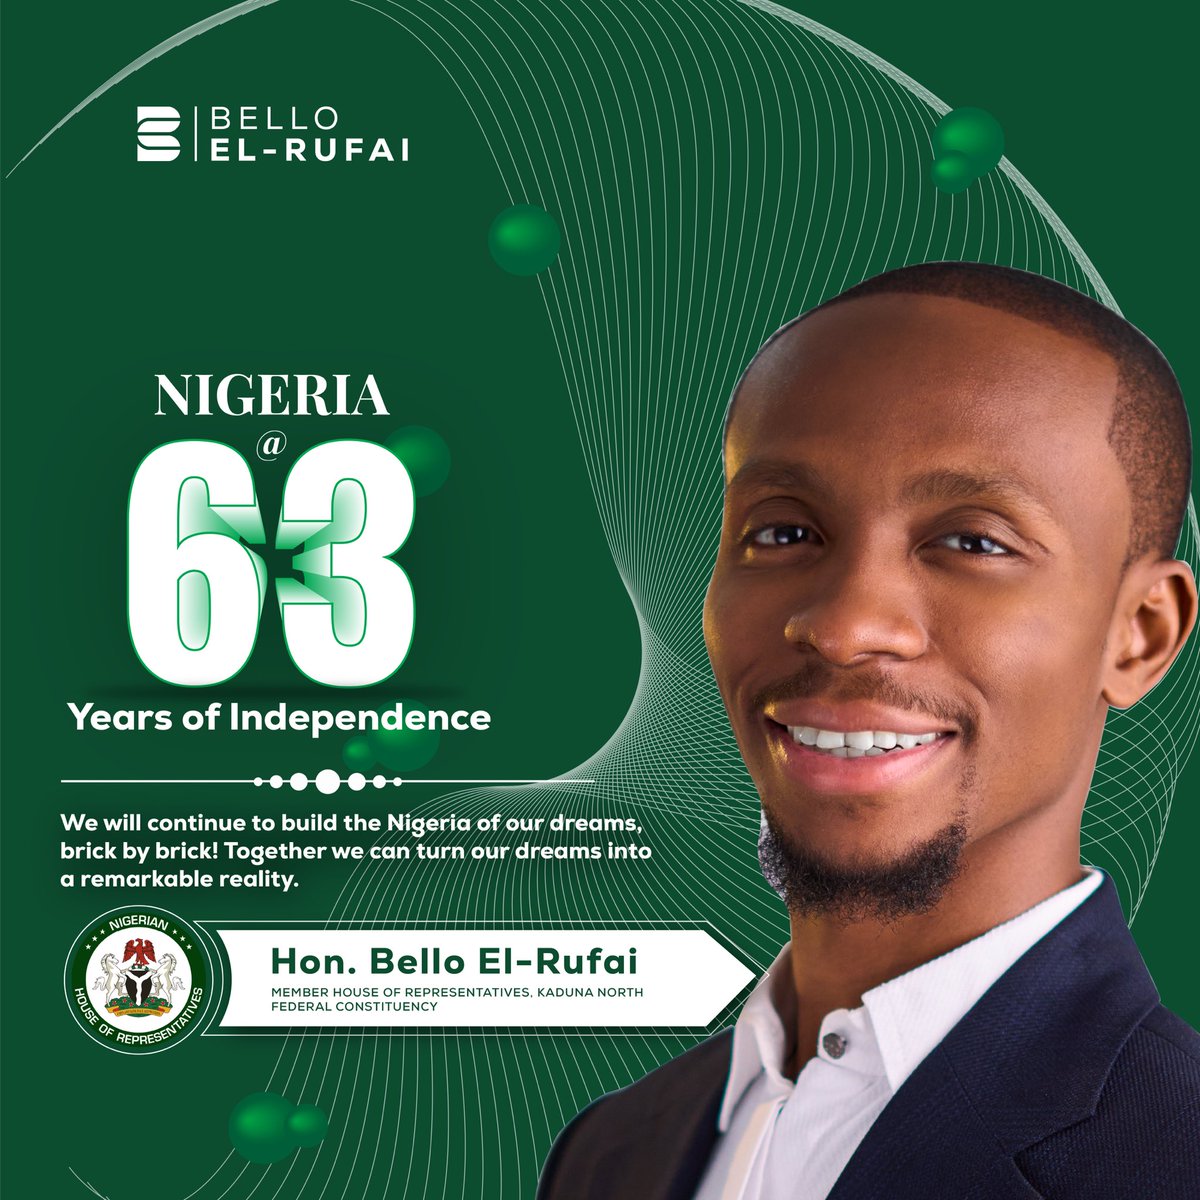 Happy Independence Day to our beloved Nigeria. 

#happyindependenceday #belloelrufai